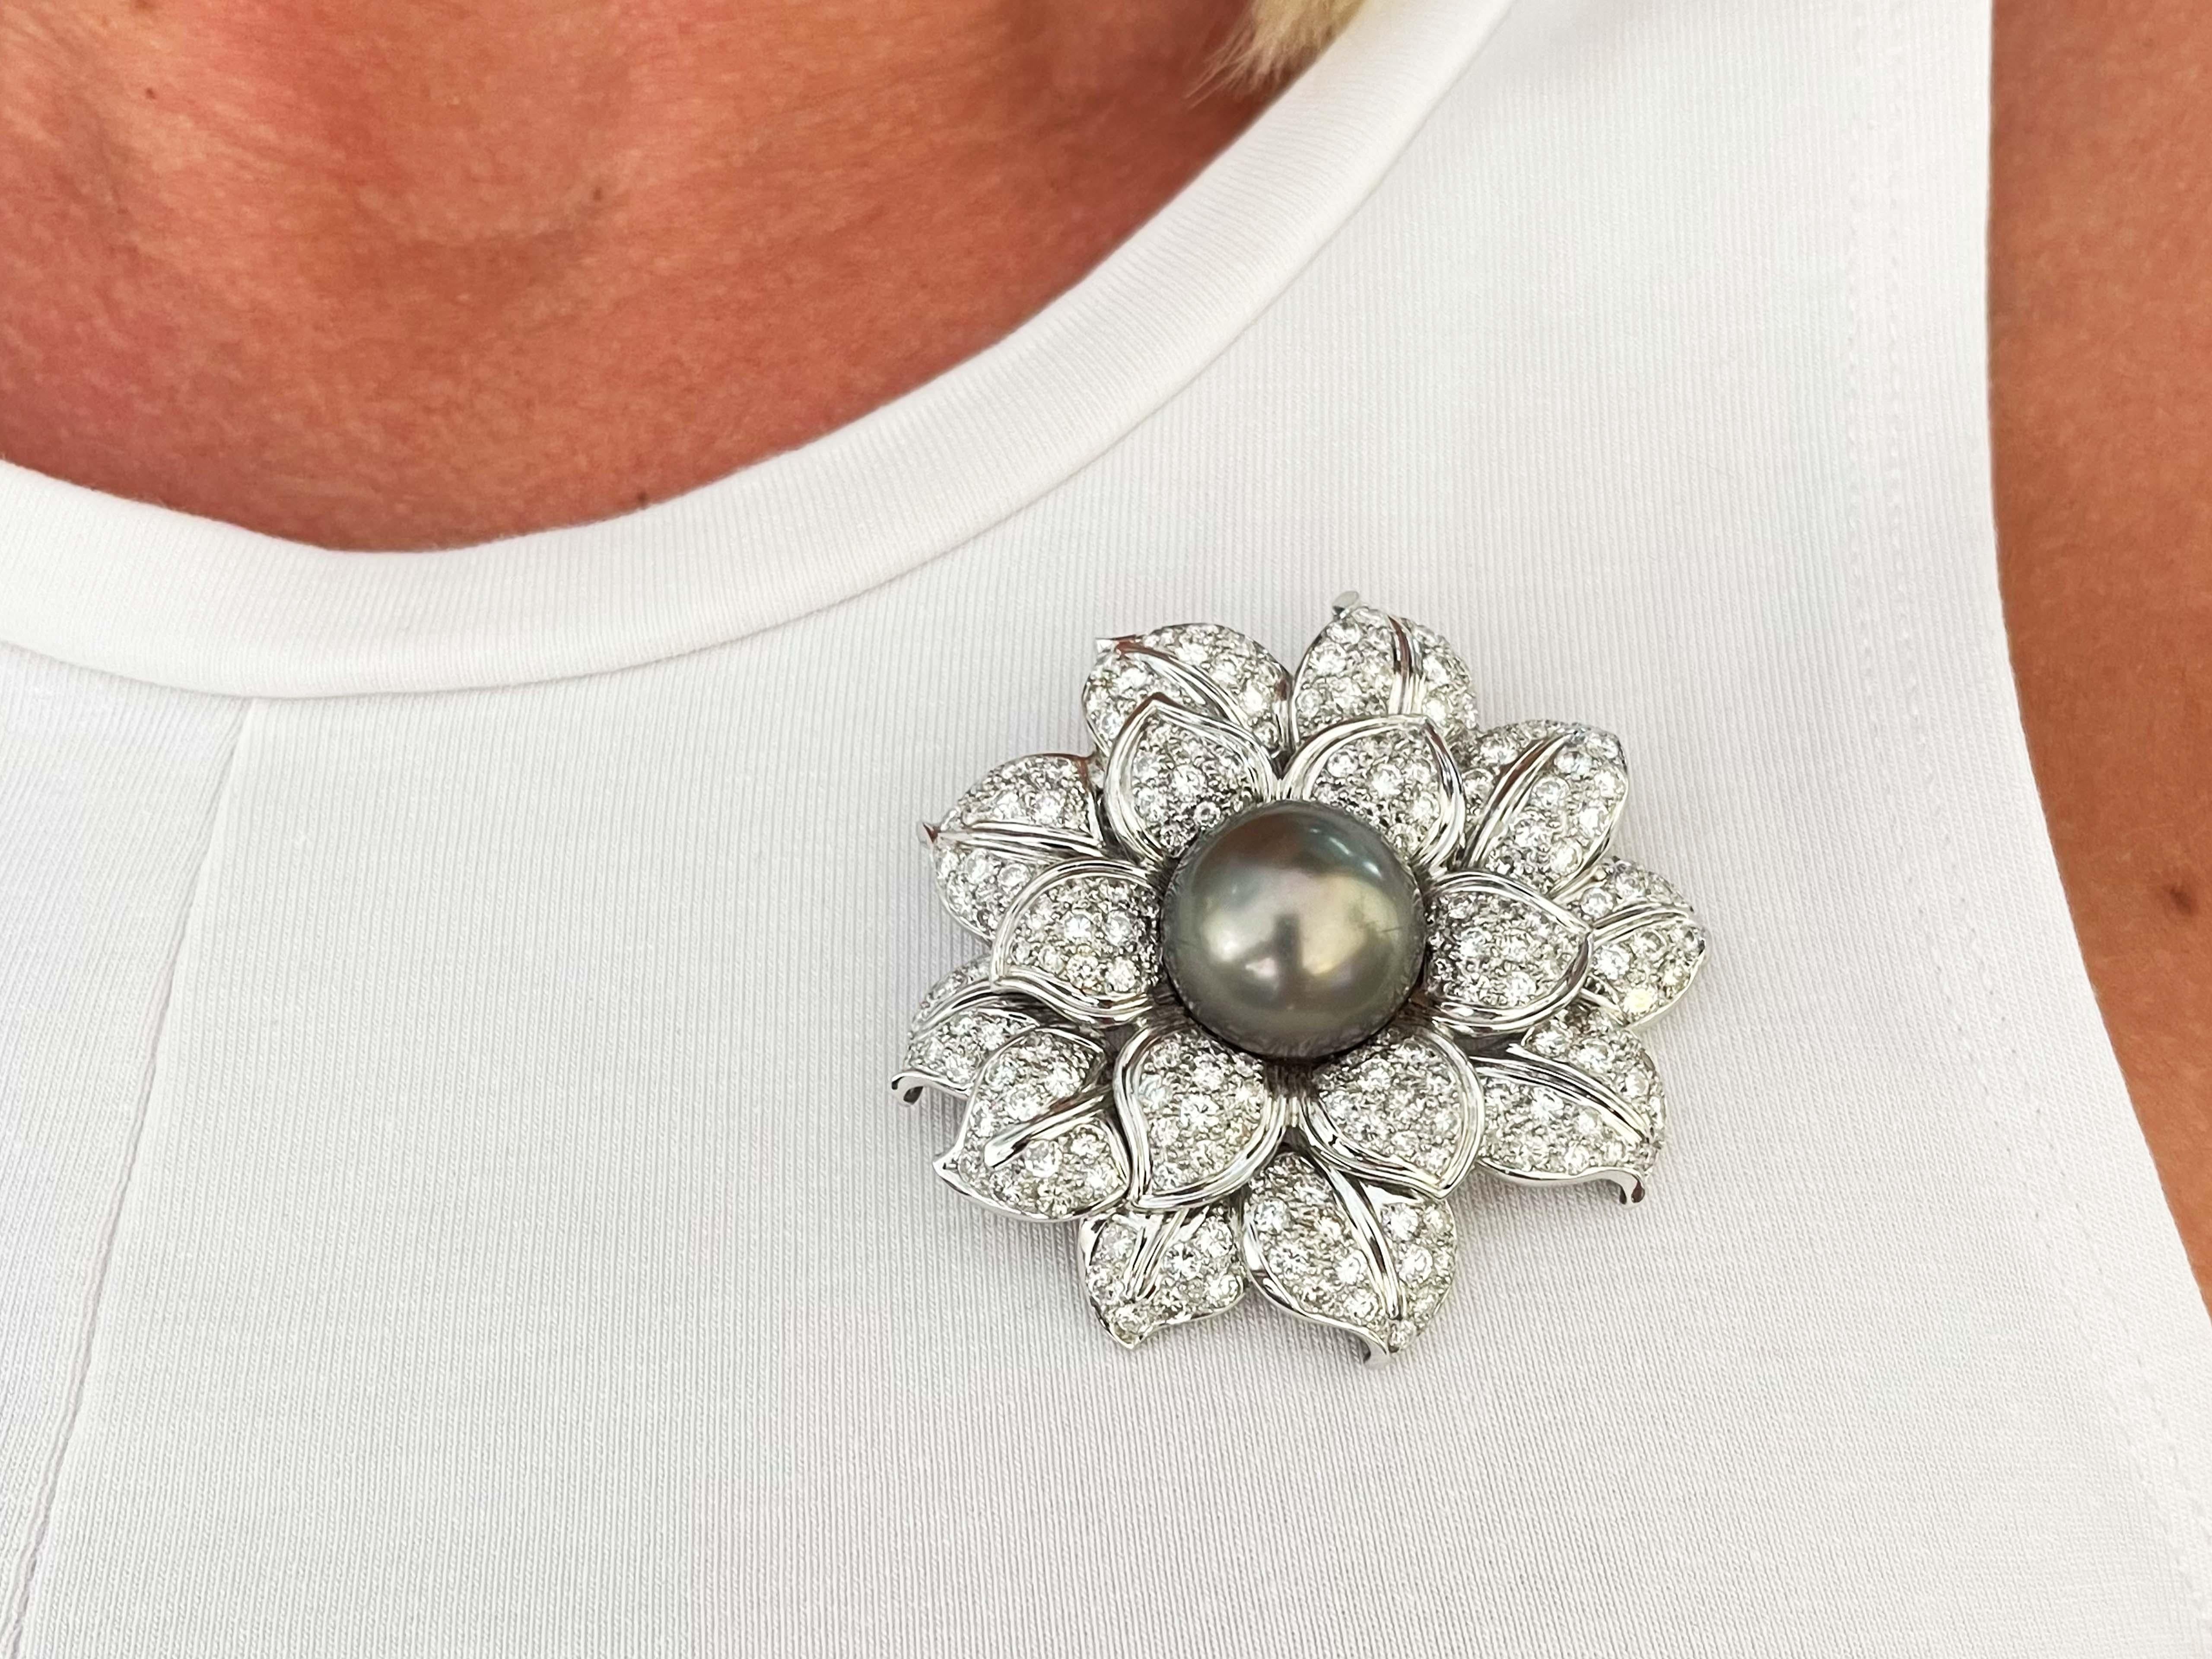 Item Specifications:

Style: Flower Brooch   

Metal: 18k White Gold

Diamond count: ~190

Diamond Shape: Round Brilliant

Diamond total carat weight: ~9.09

Diamond color: F-H

Diamond clarity: VS1-SI2

Pearl: Tahitian Pearl

Pearl Diameter: ~17